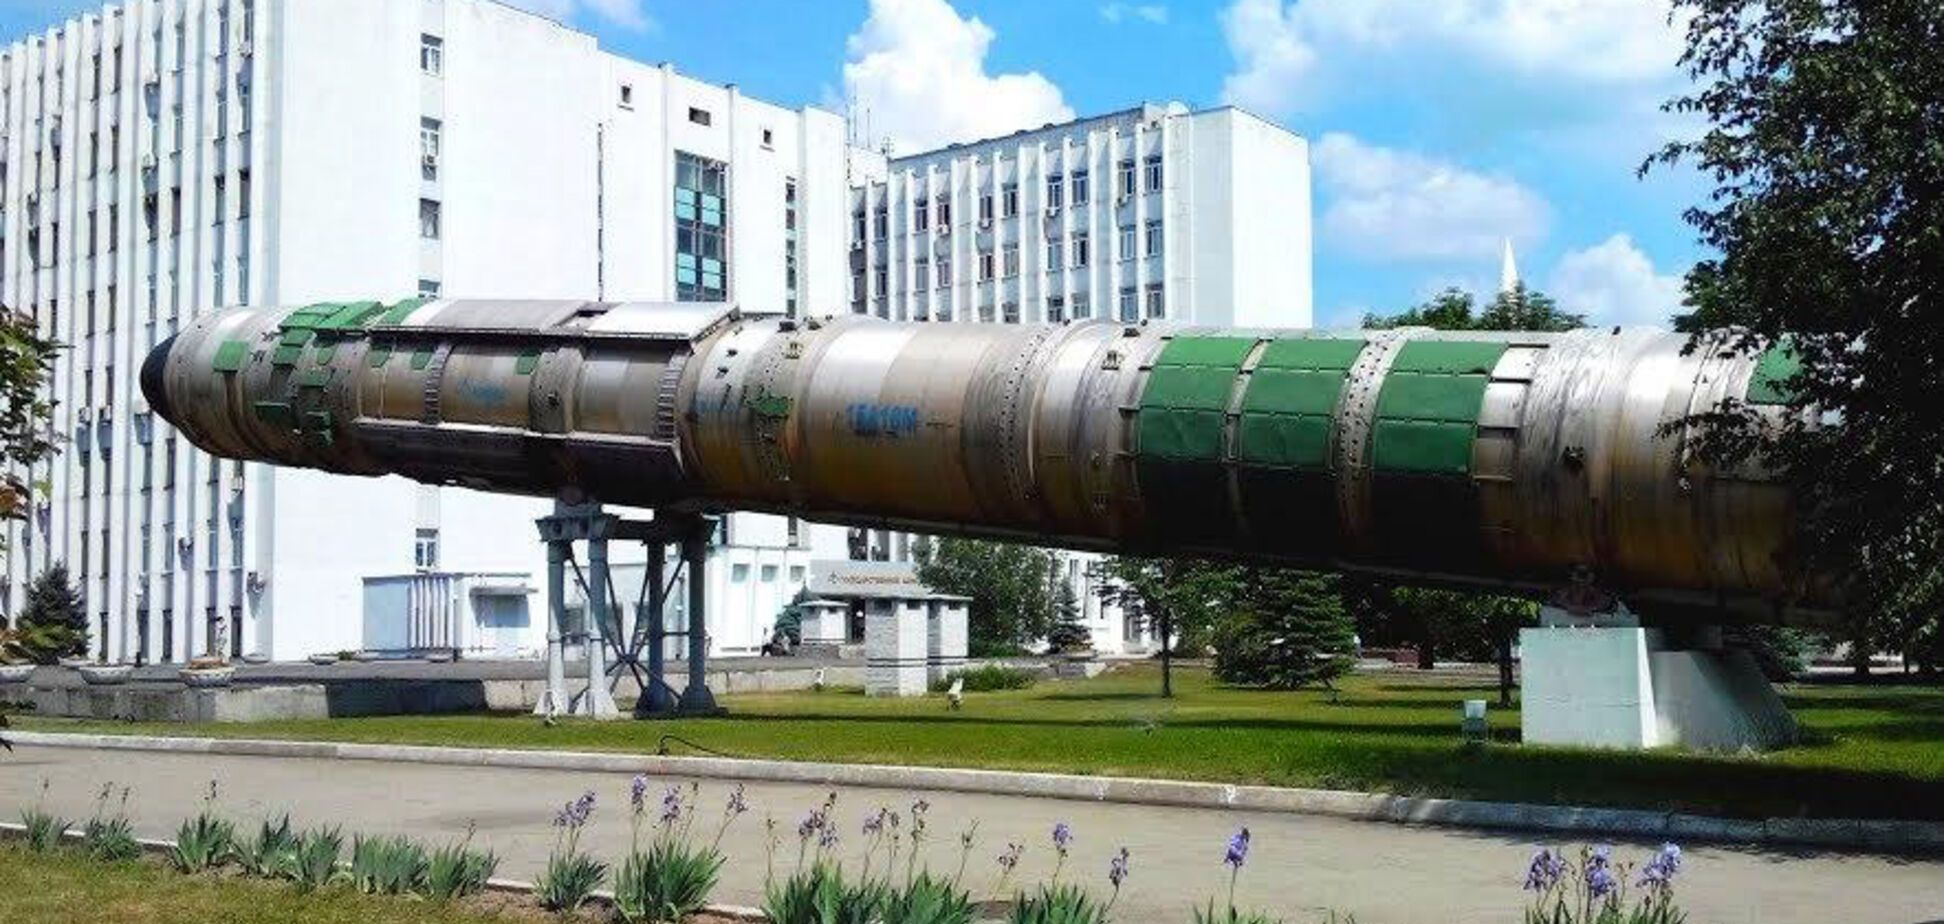 Скандал с 'украинскими' двигателями для ракет КНДР: найден российский след